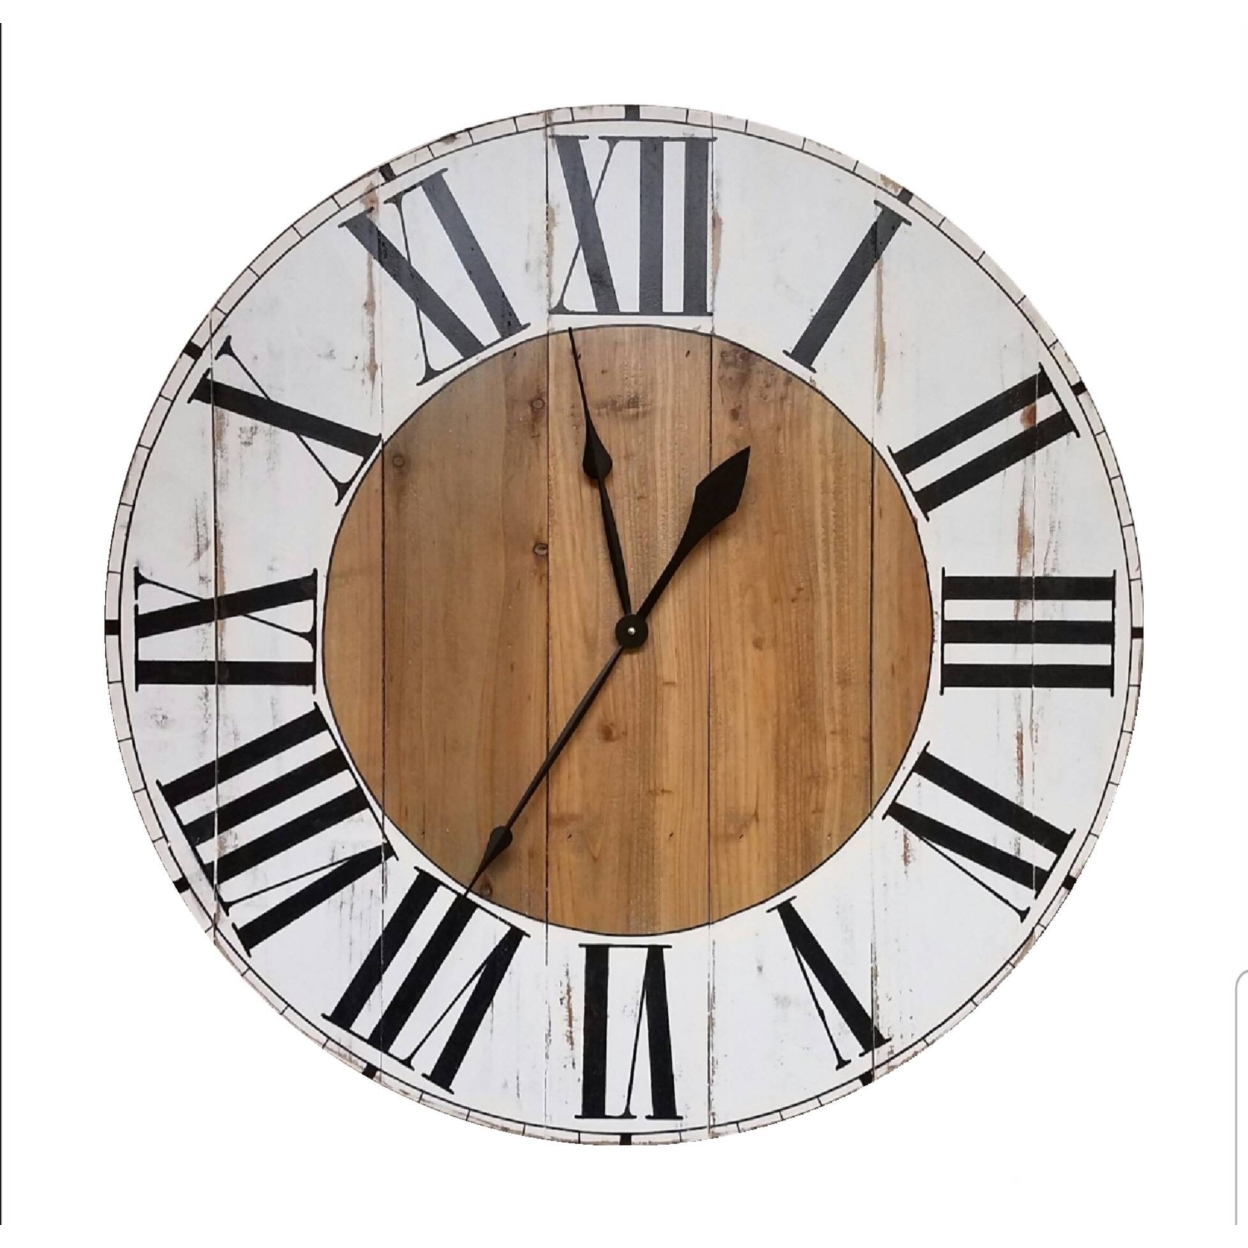 The Adeline Farmhouse clock - rustic clock - oversized wall clock - big clock - large clock - farmhouse decor - rustic decor - - 36 INCH